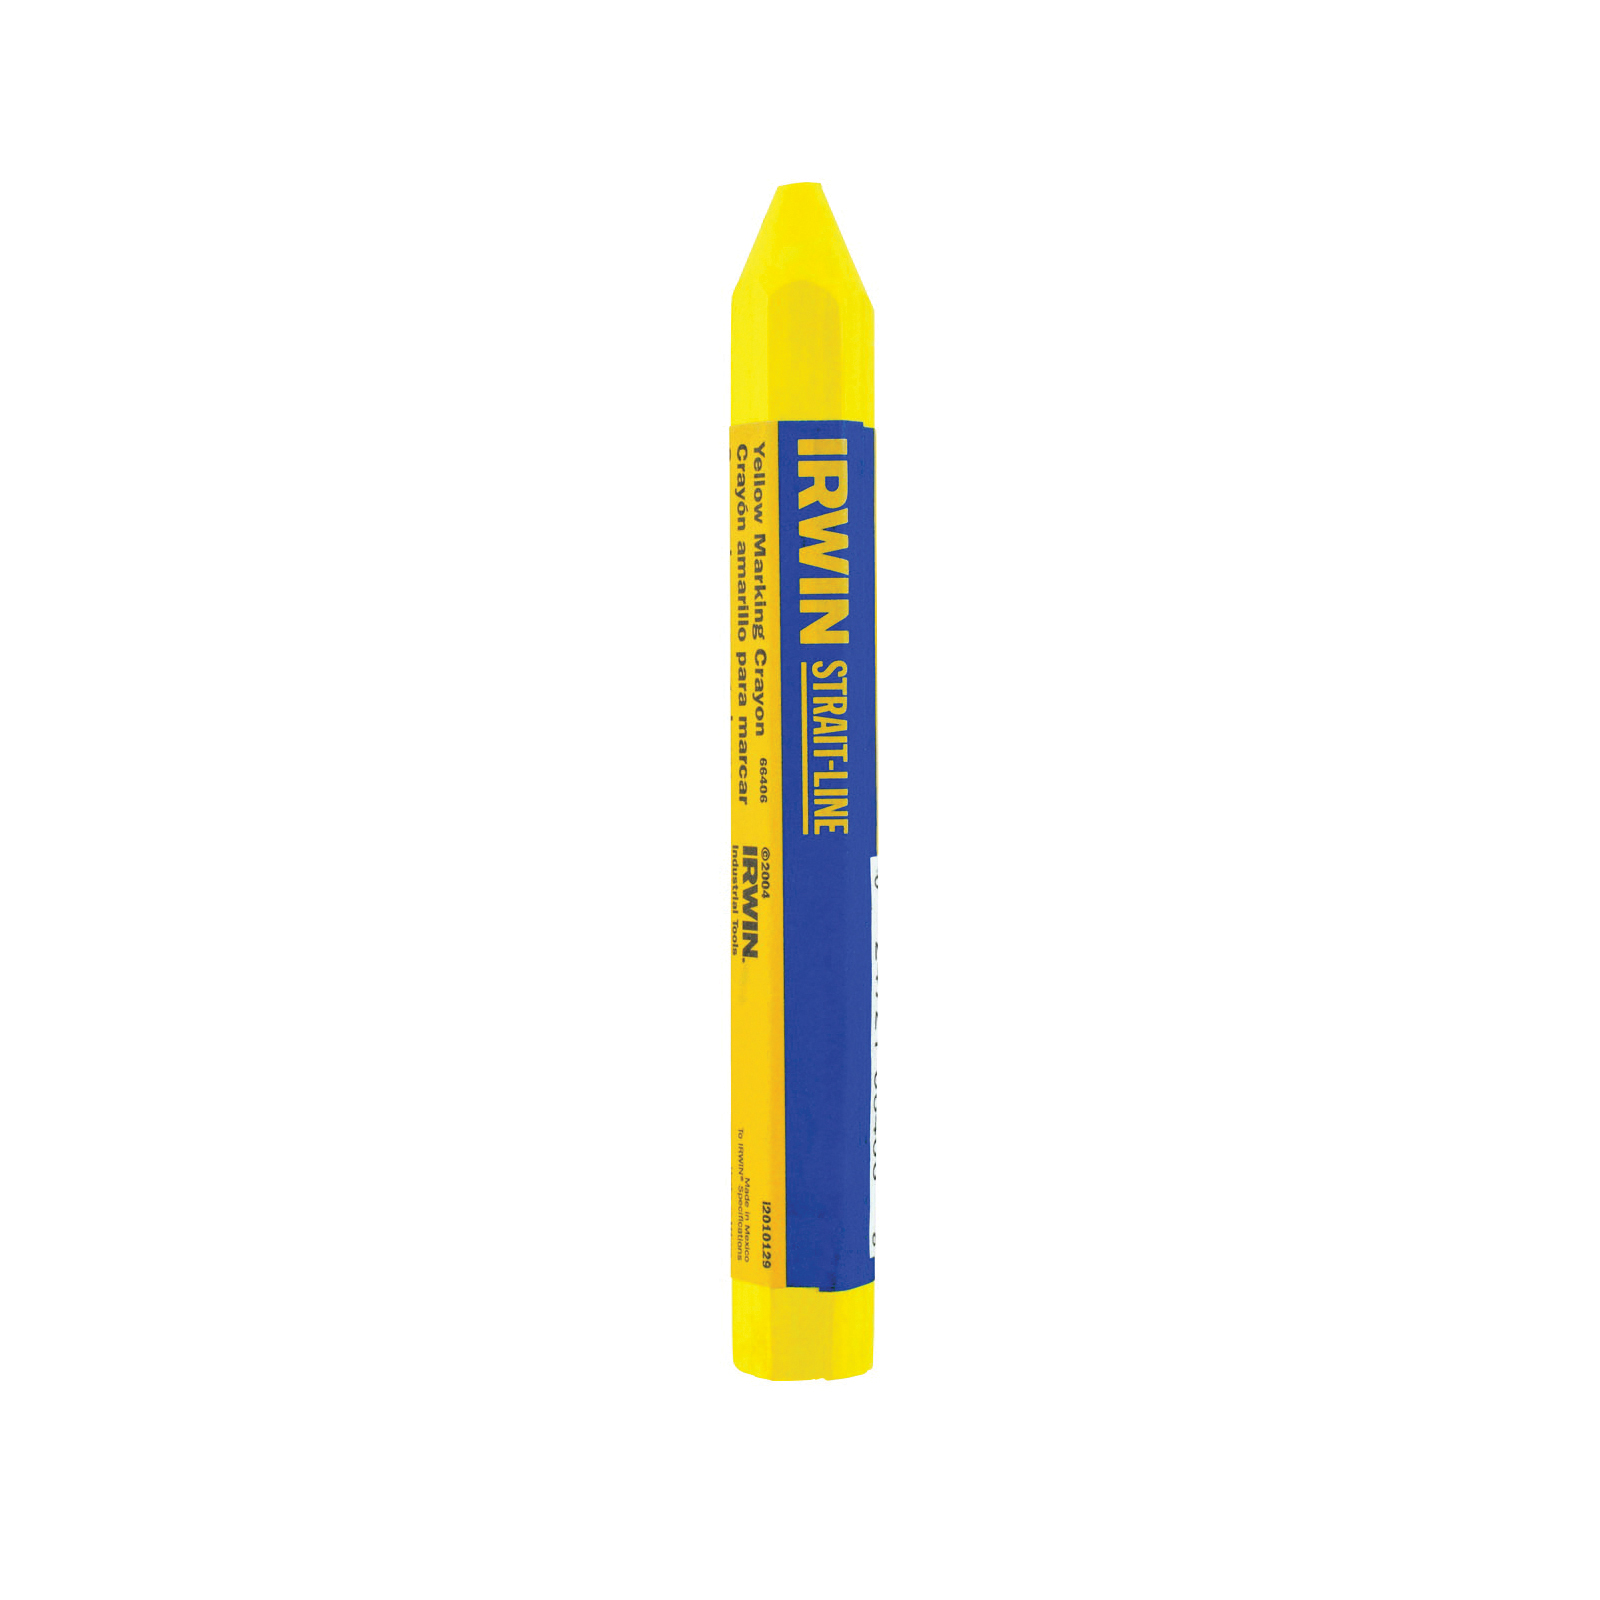 Irwin 66406 Hi-Visibility Lumber Crayon, Yellow, 1/2 in D